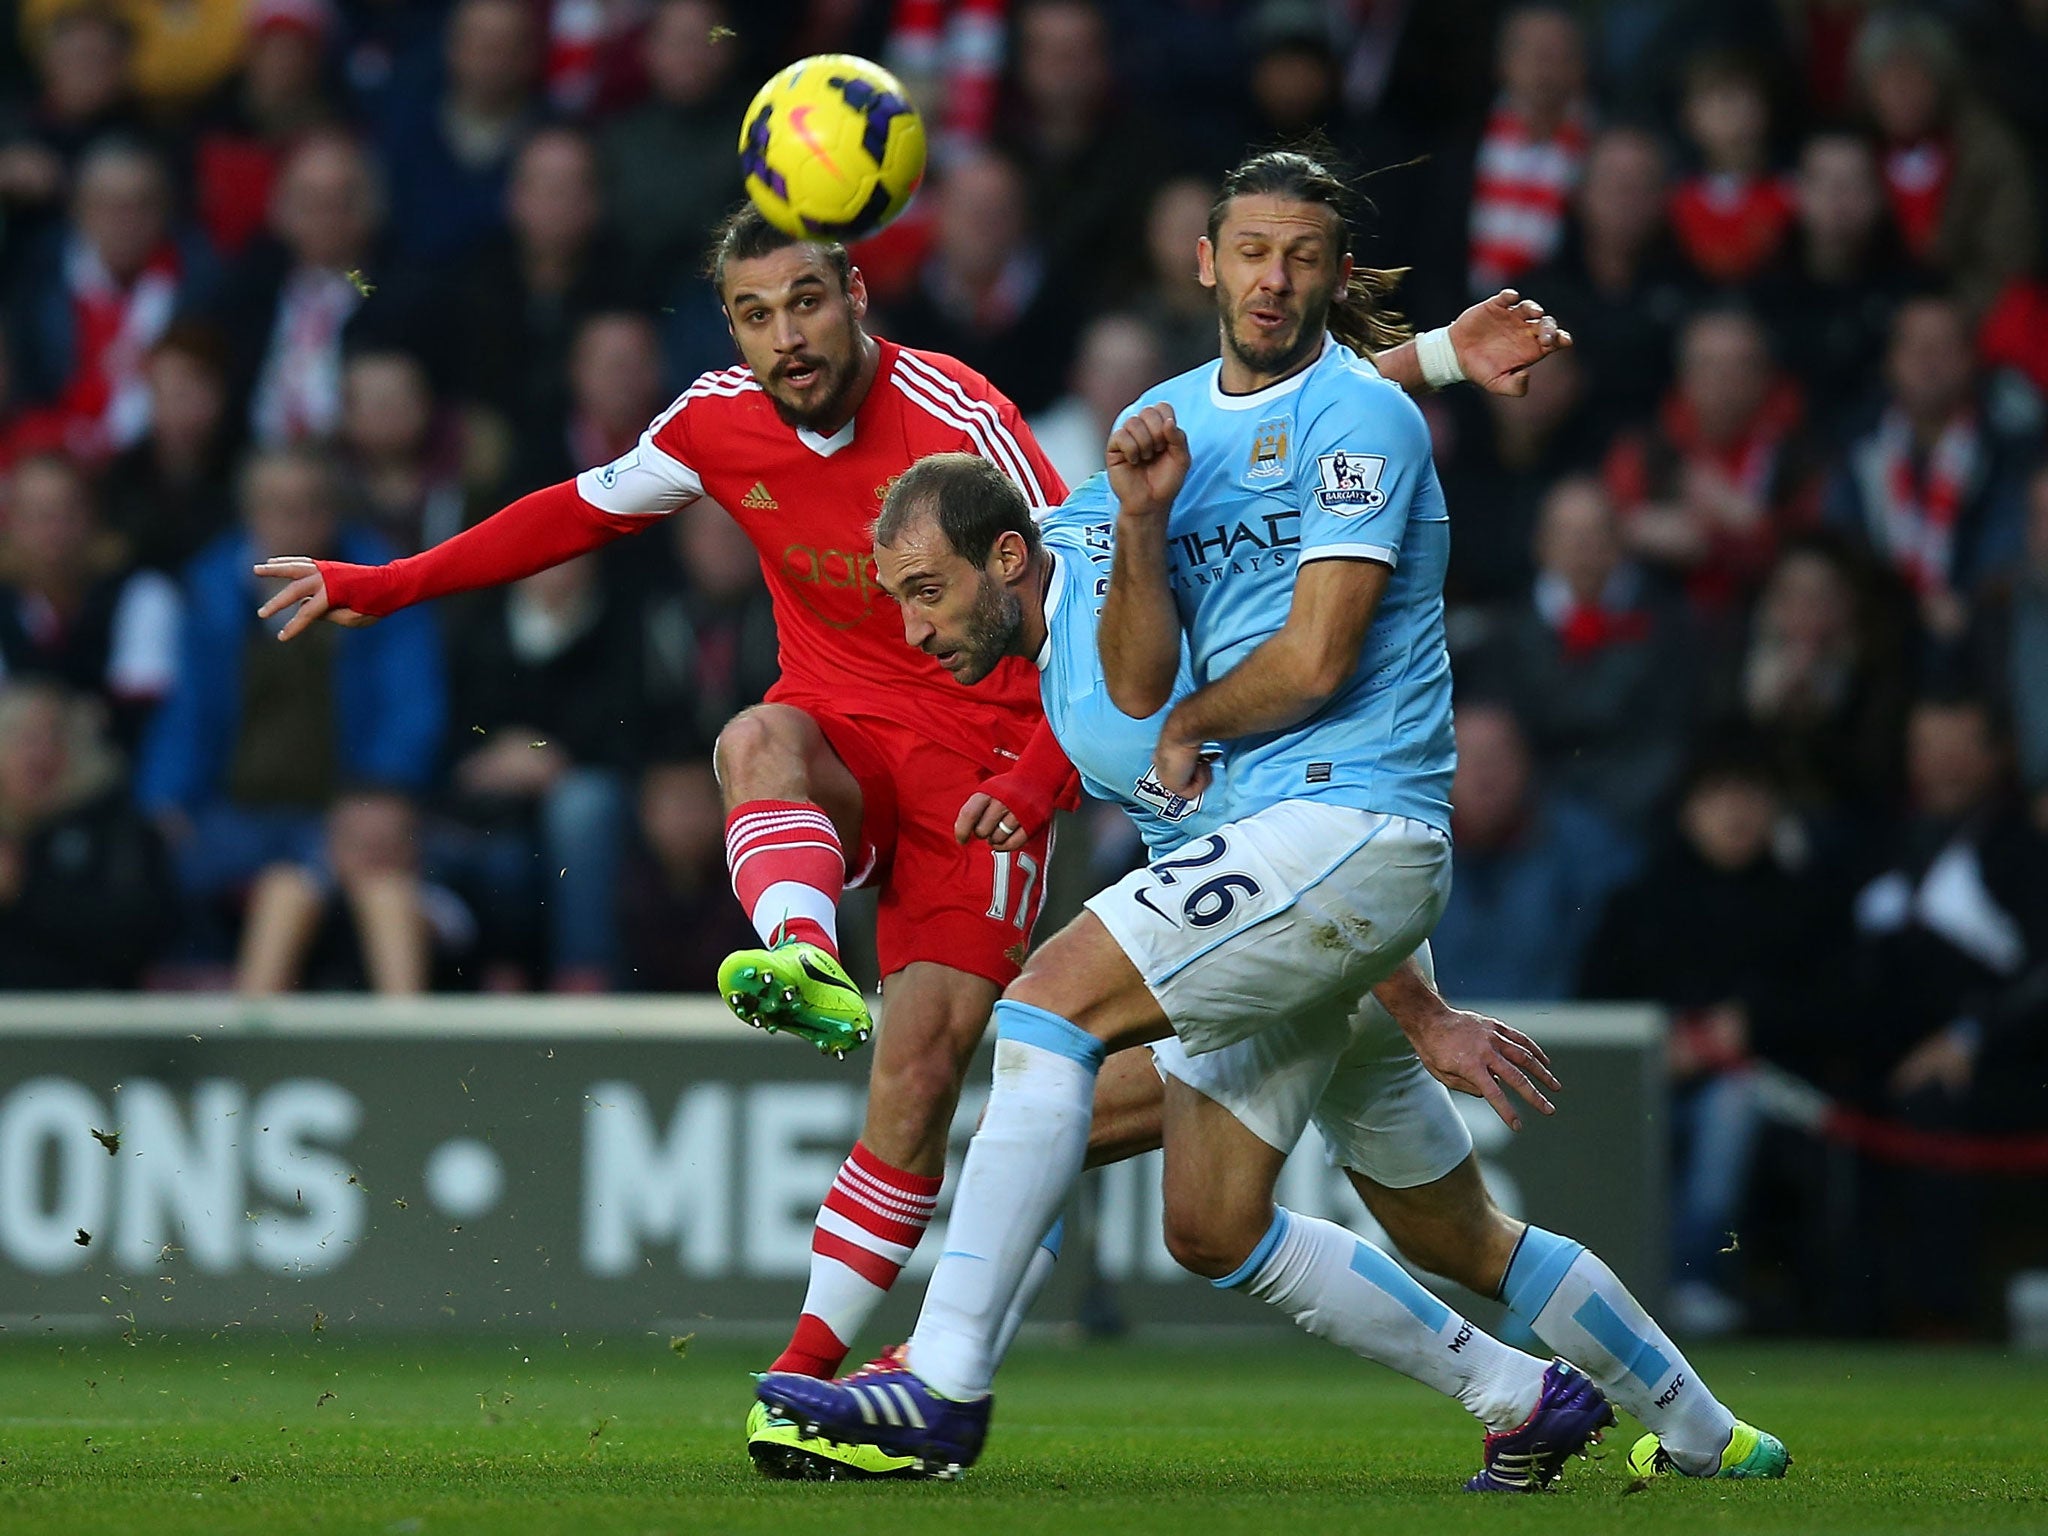 Daniel Osvaldo of Southampton shoots to score the equalising goal